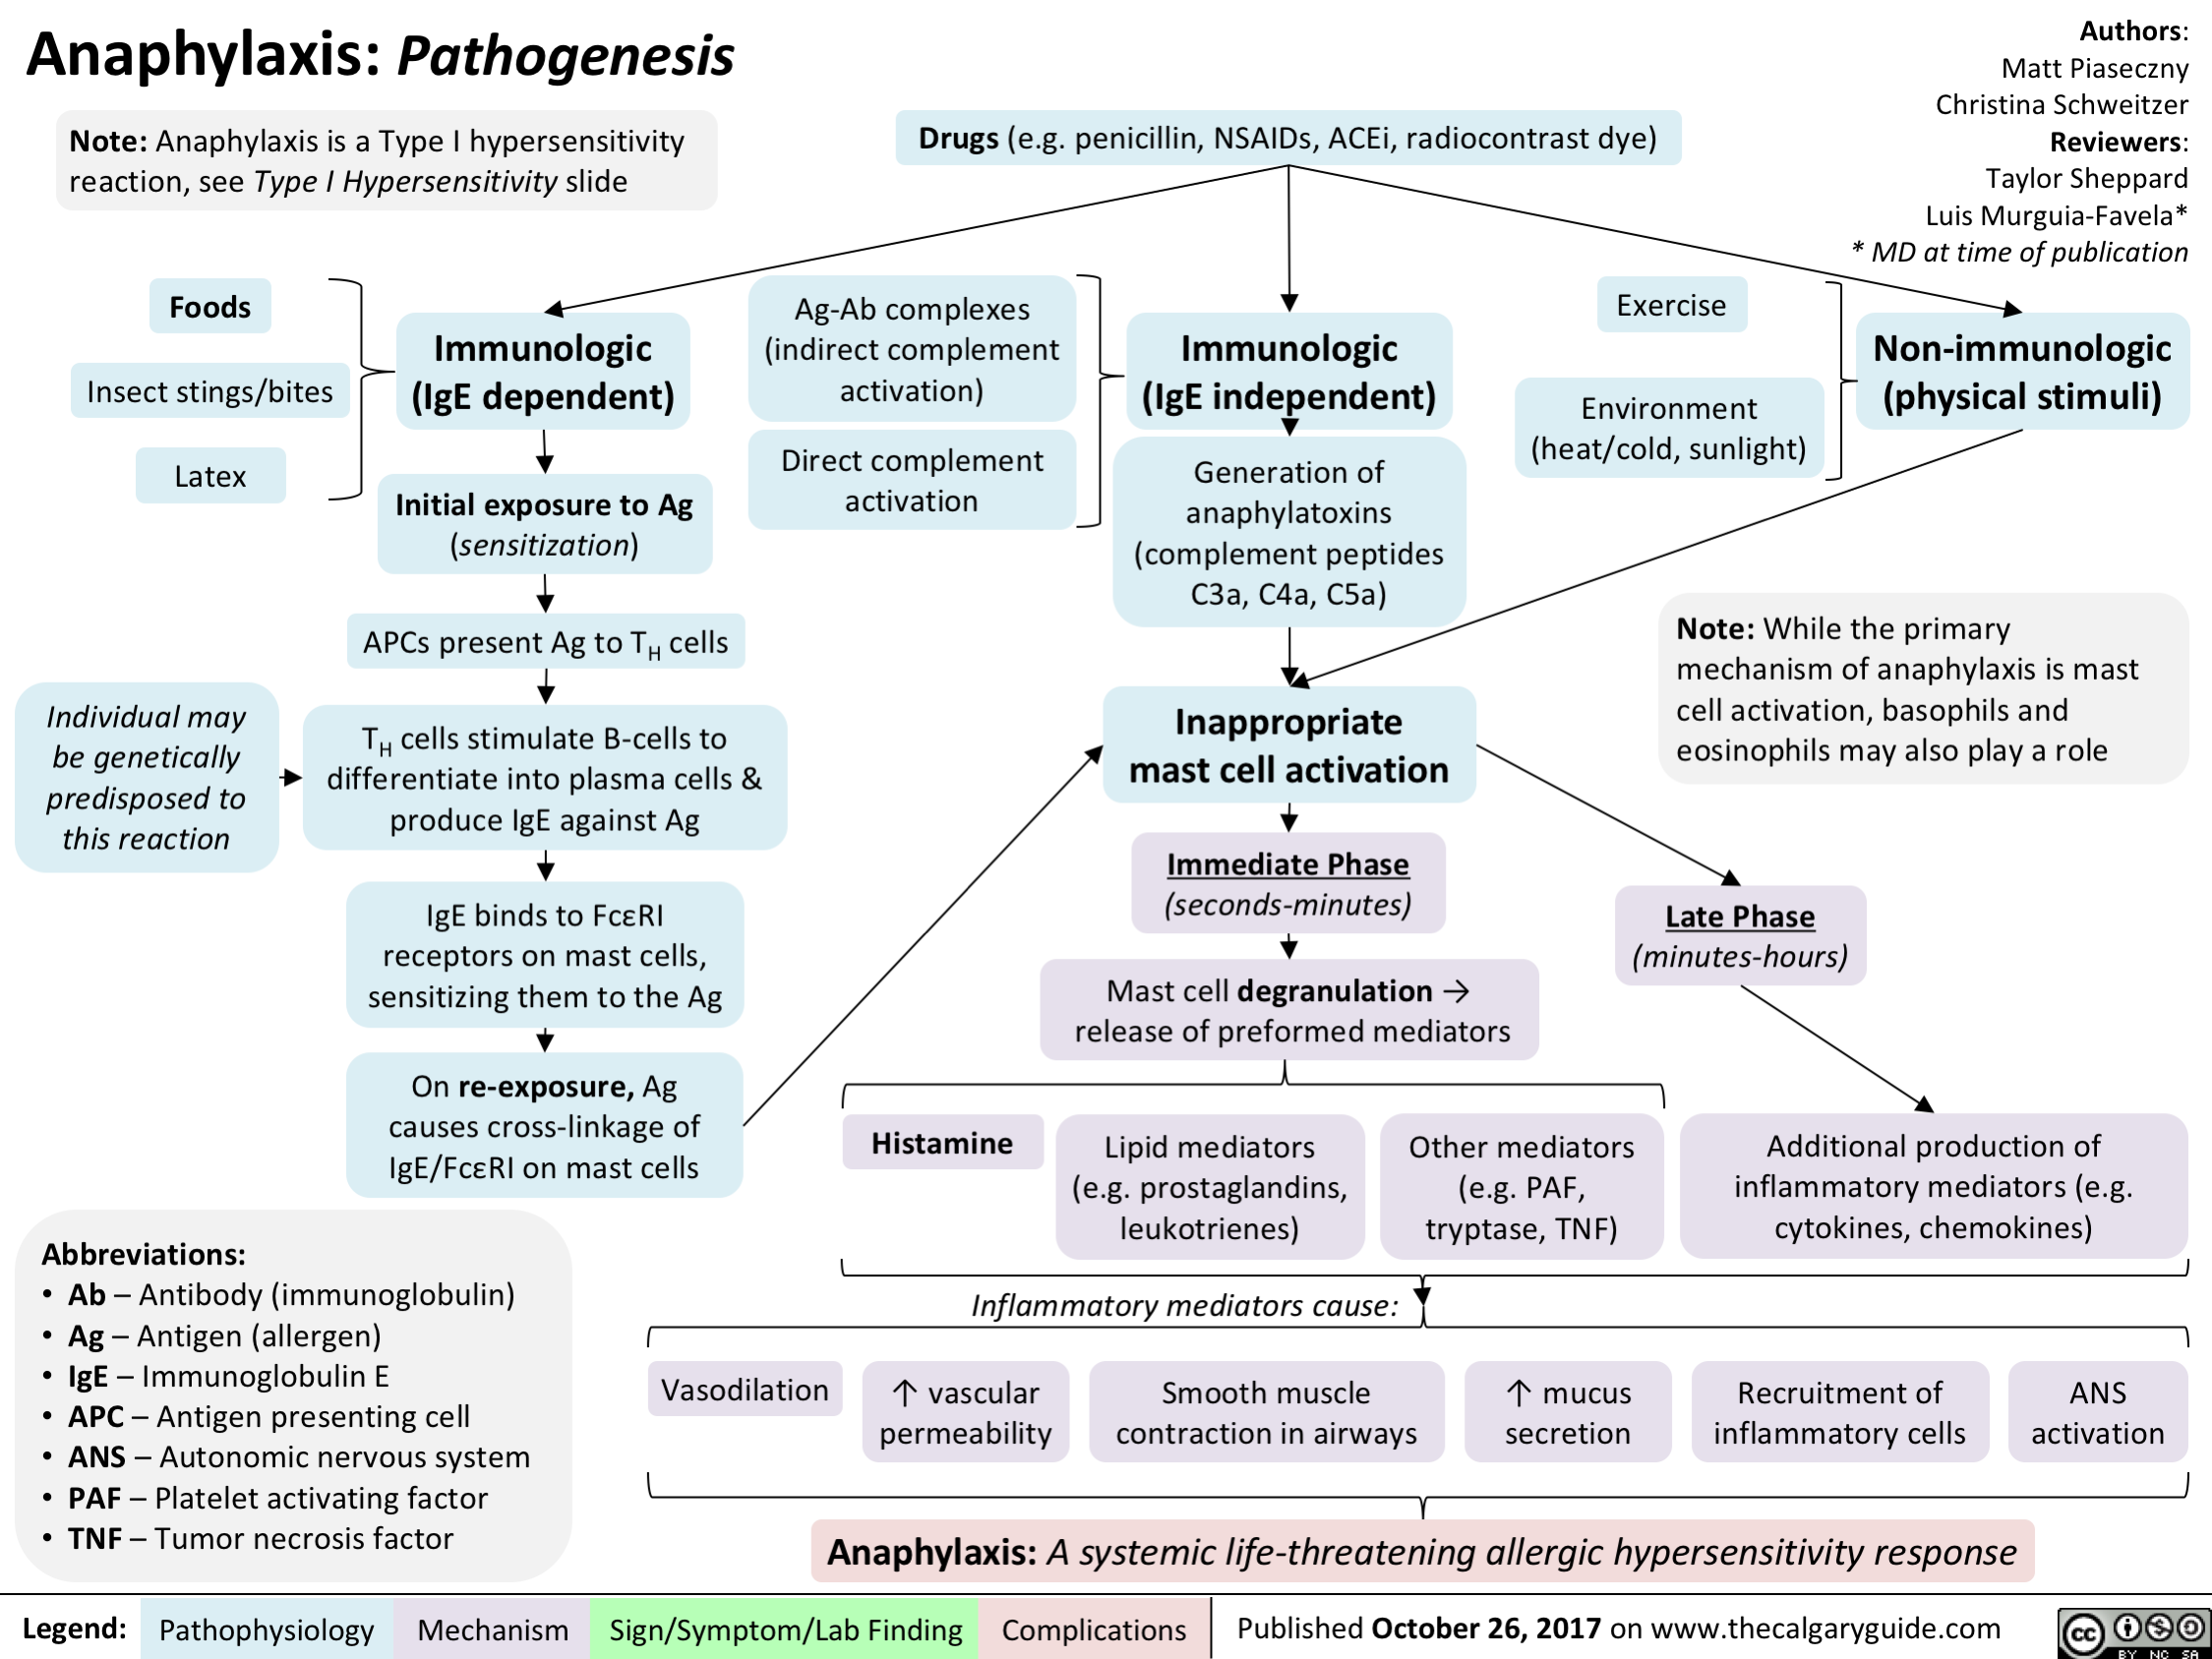 Pathogenesis of Anaphylaxis